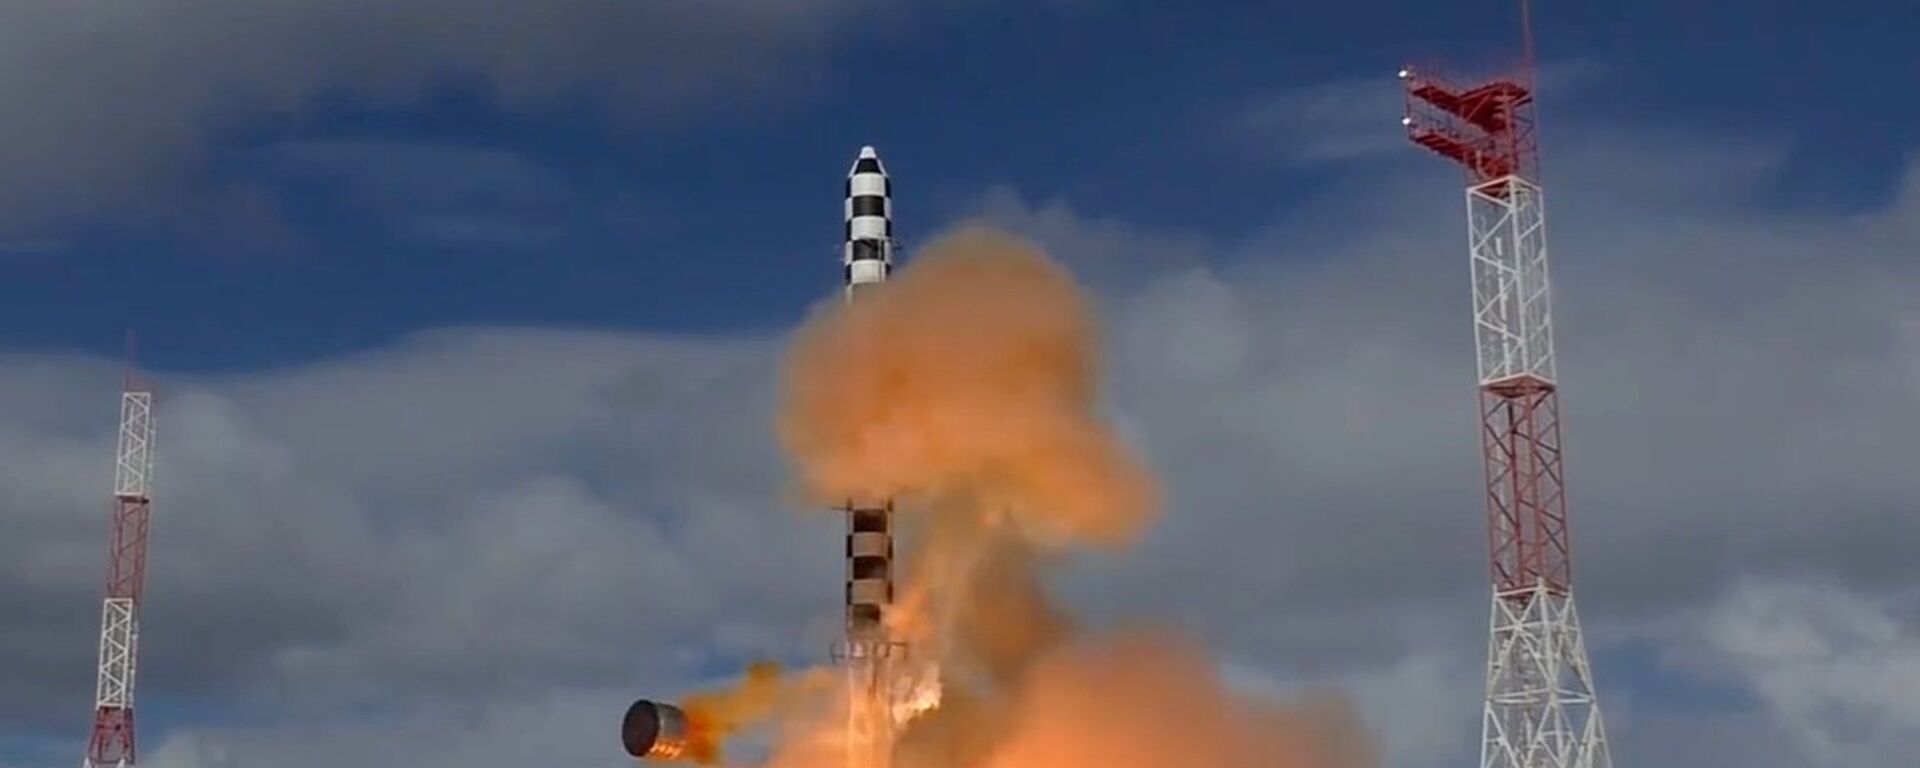 Запуск ракеты «Сармат» с космодрома «Плесецк» - Sputnik Արմենիա, 1920, 02.04.2021